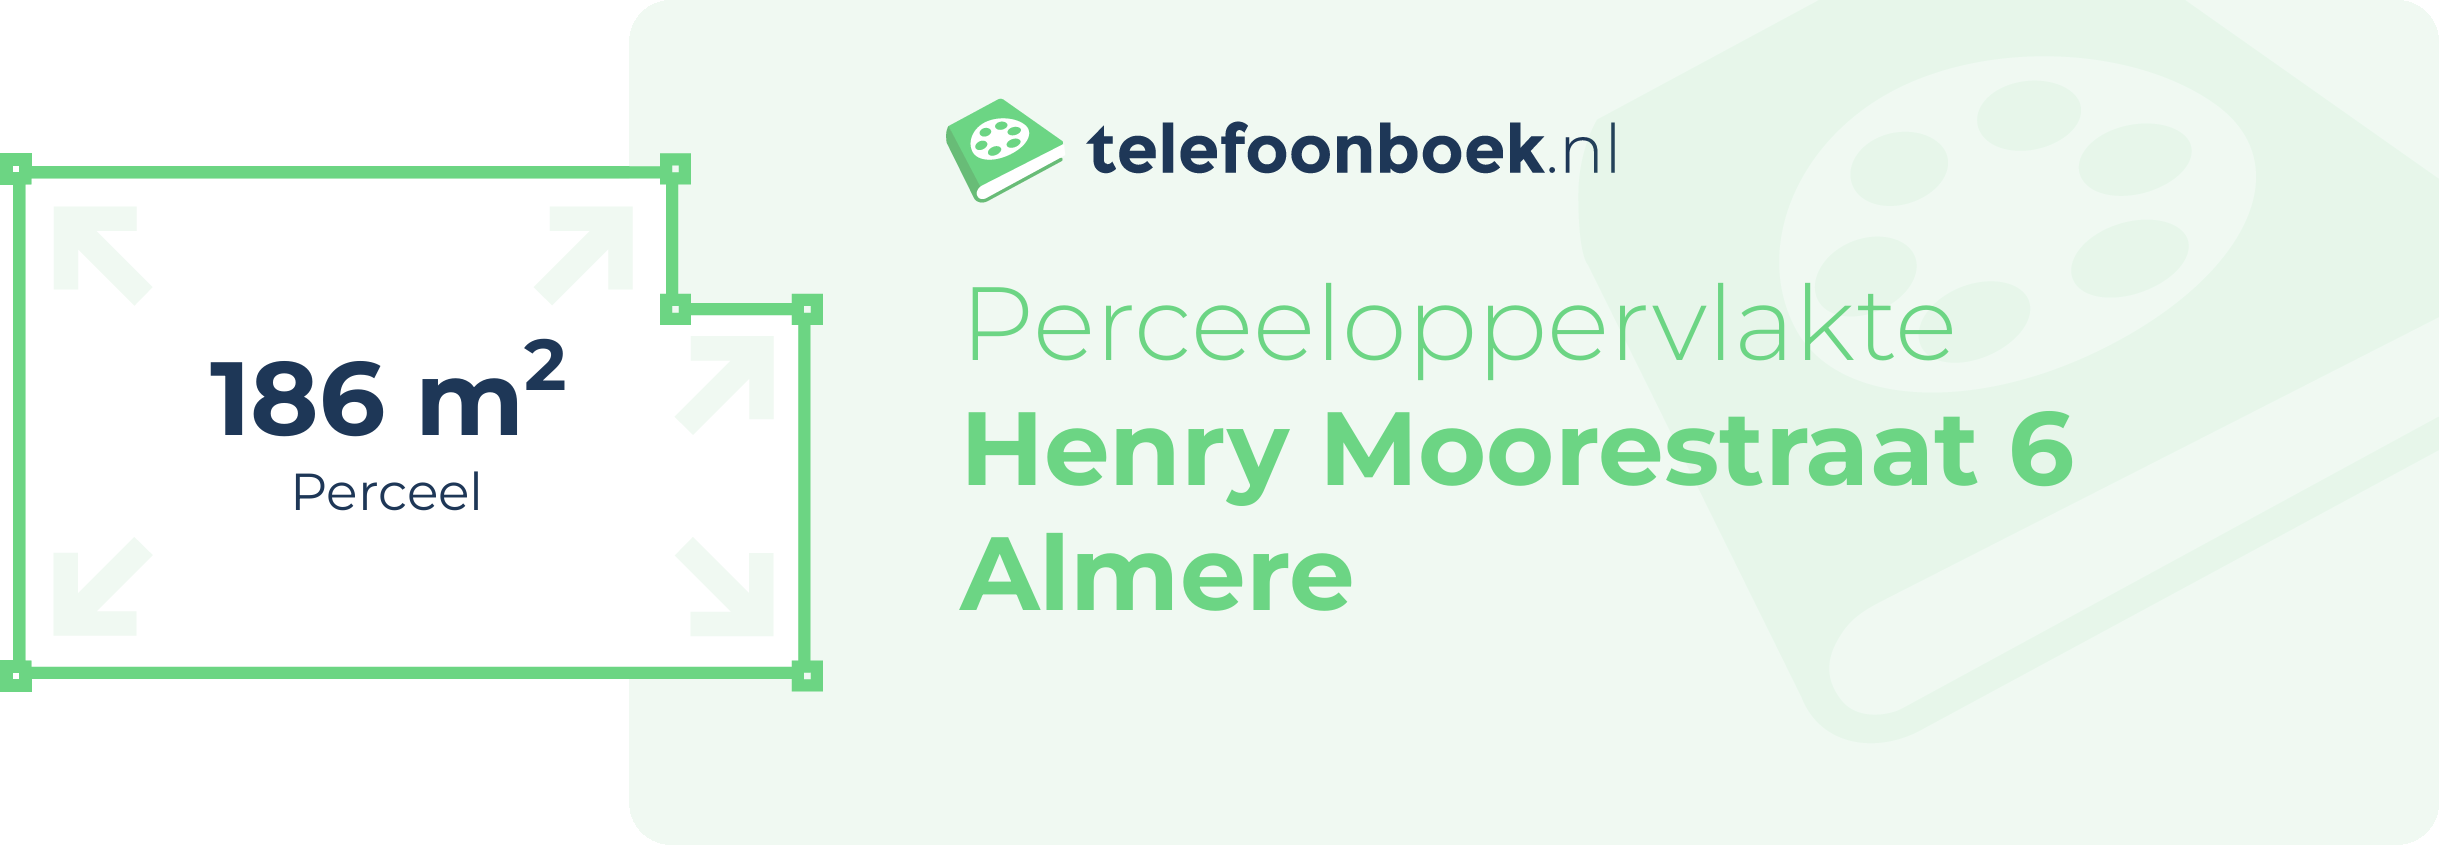 Perceeloppervlakte Henry Moorestraat 6 Almere